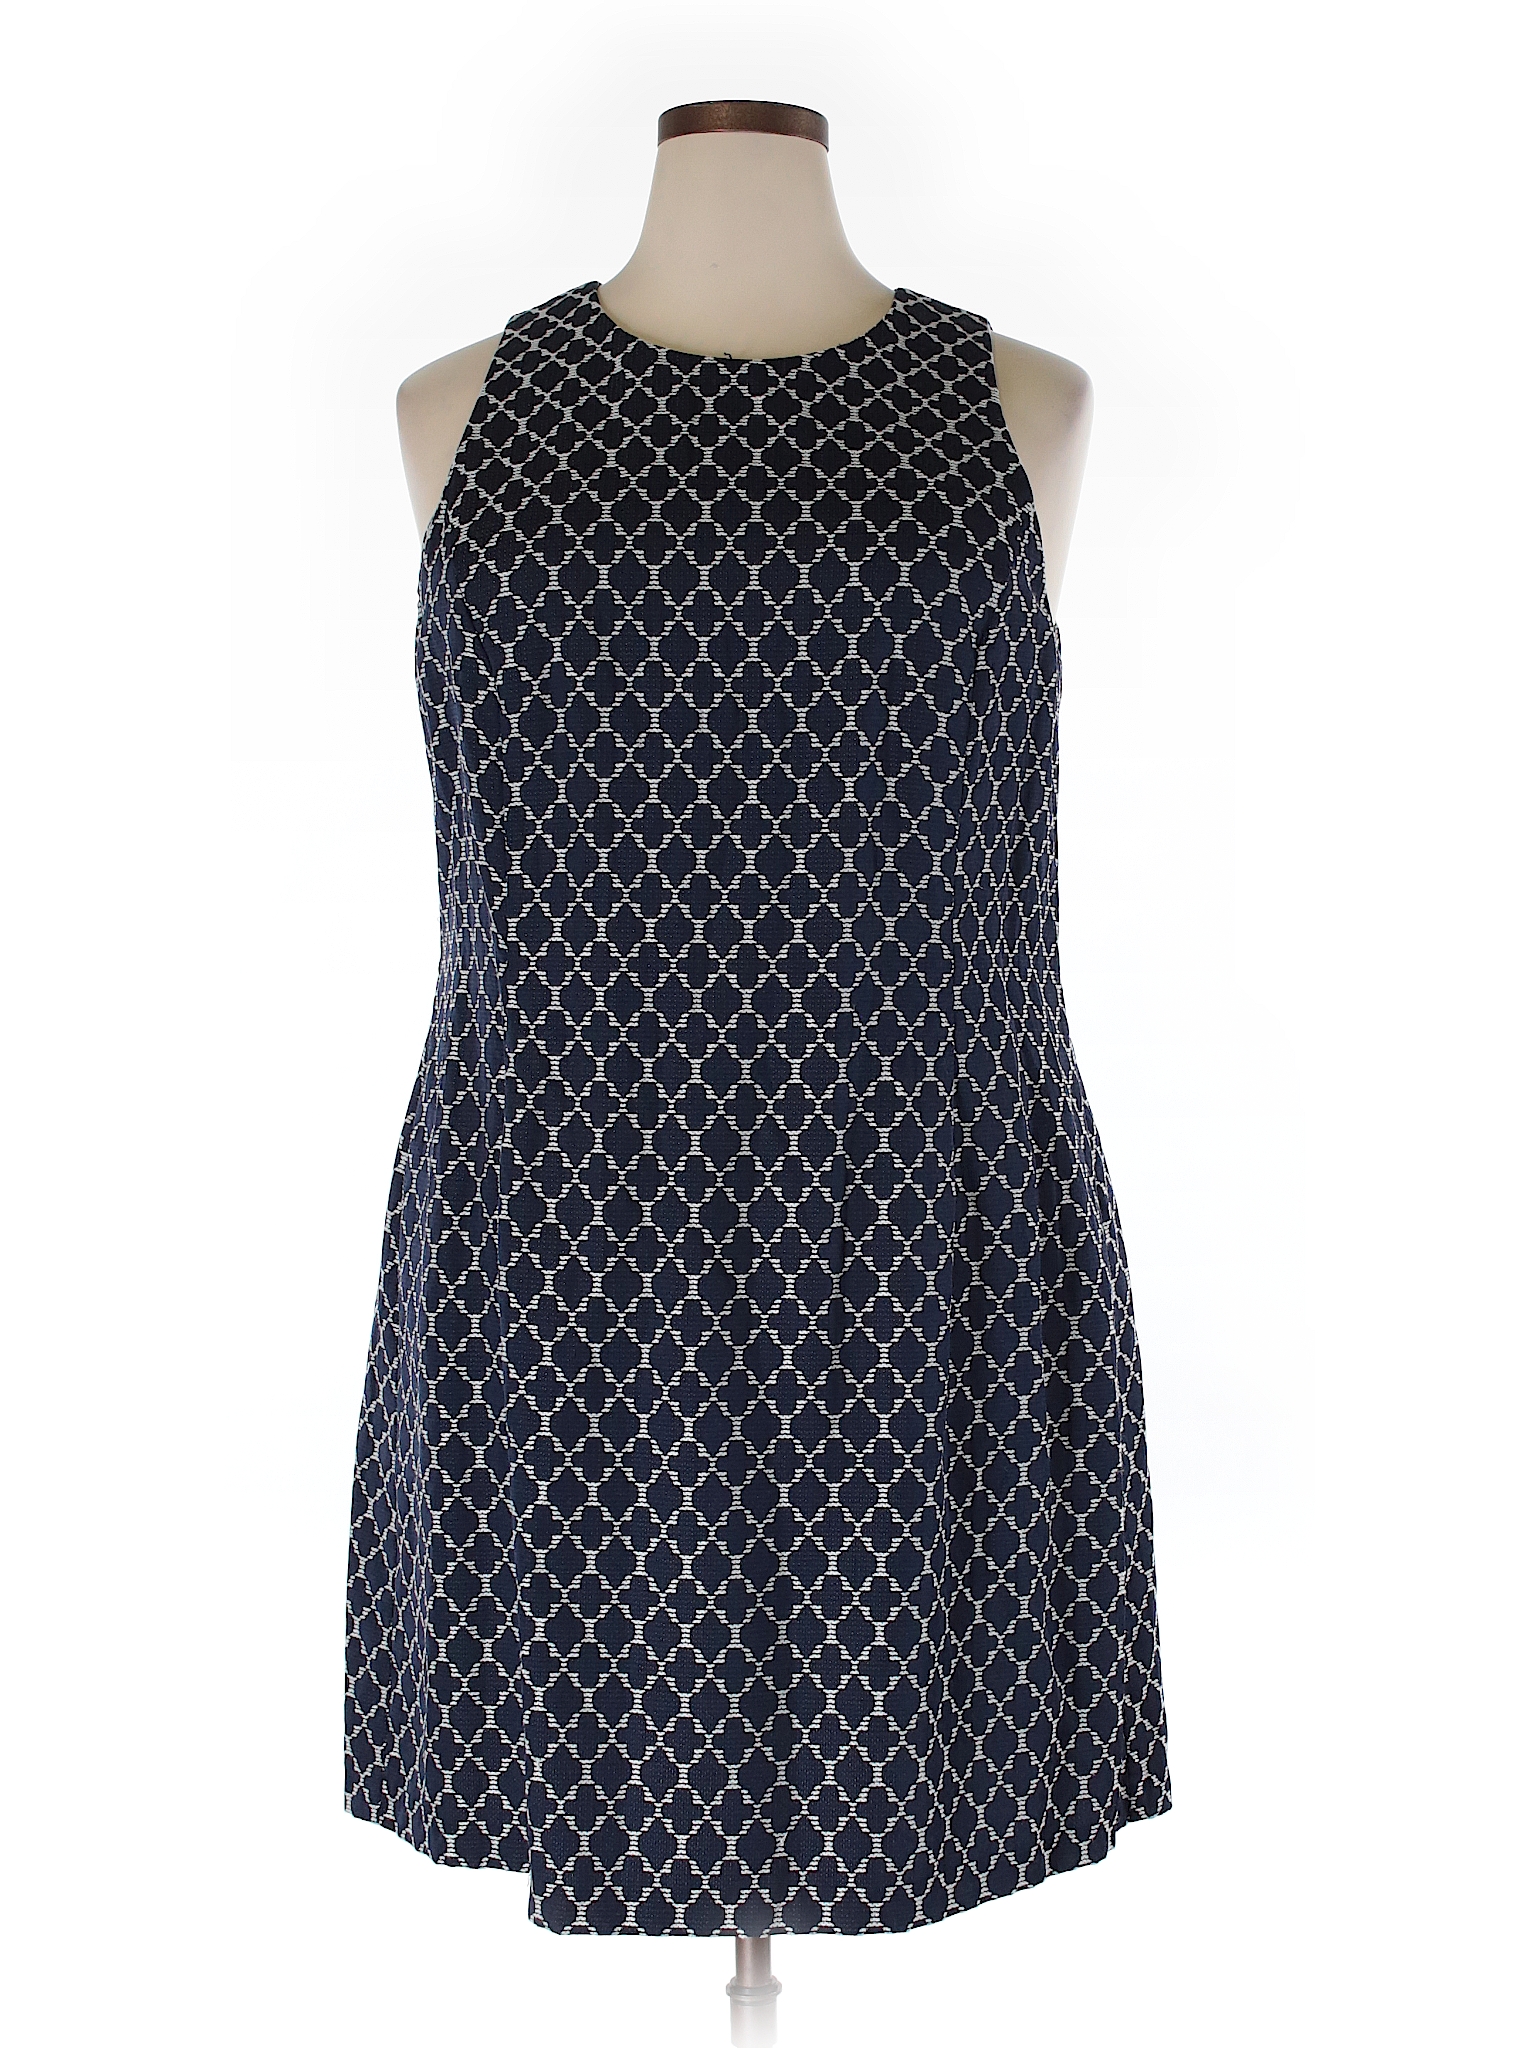 BB Dakota Print Dark Blue Casual Dress Size 22 (Plus) - 74% off | thredUP